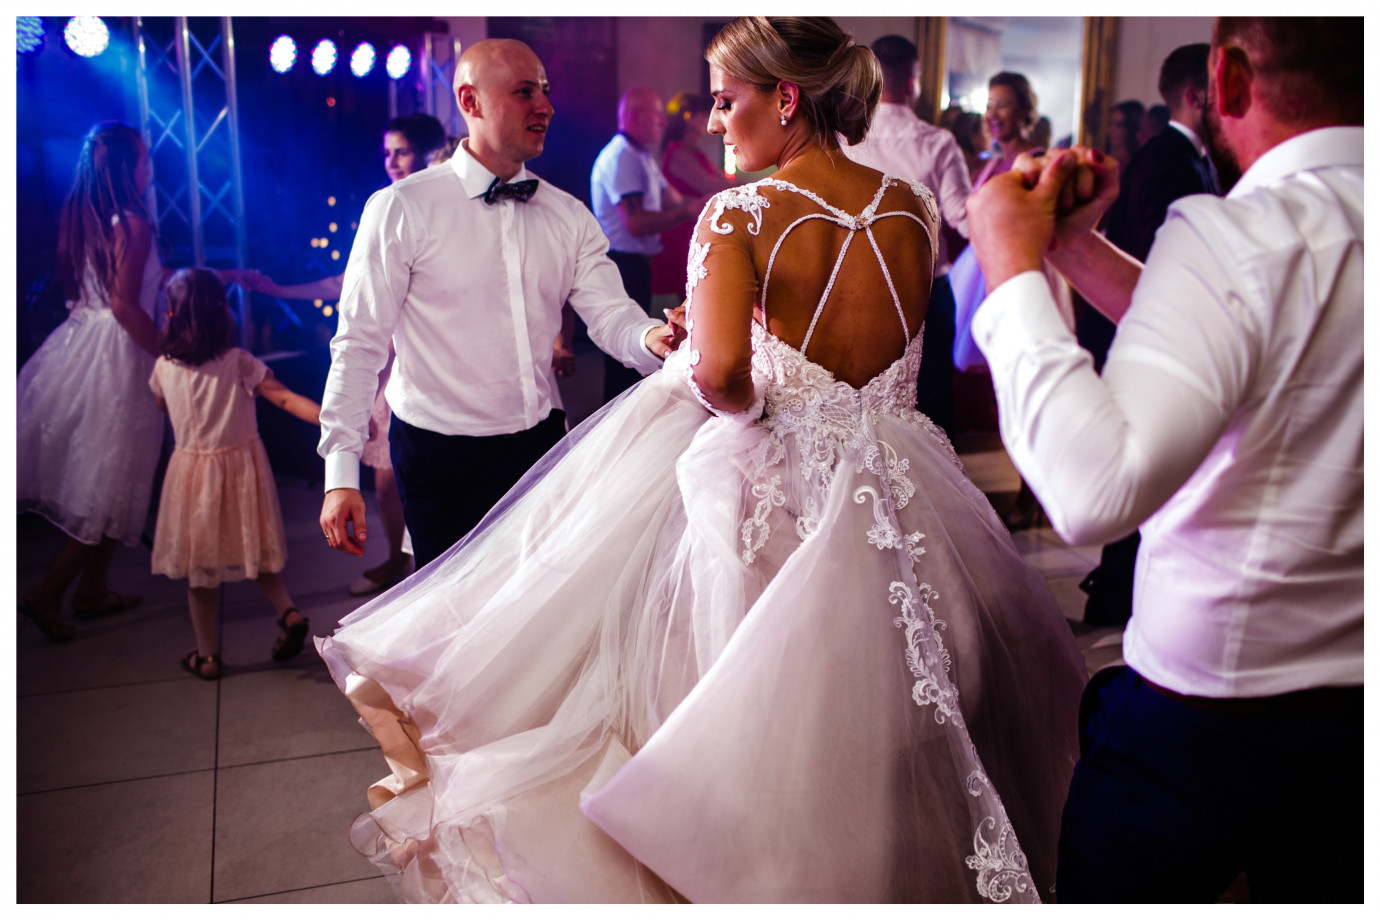 fotograf trojmiasto sebastian-skopek portfolio zdjecia slubne inspiracje wesele plener slubny sesja slubna